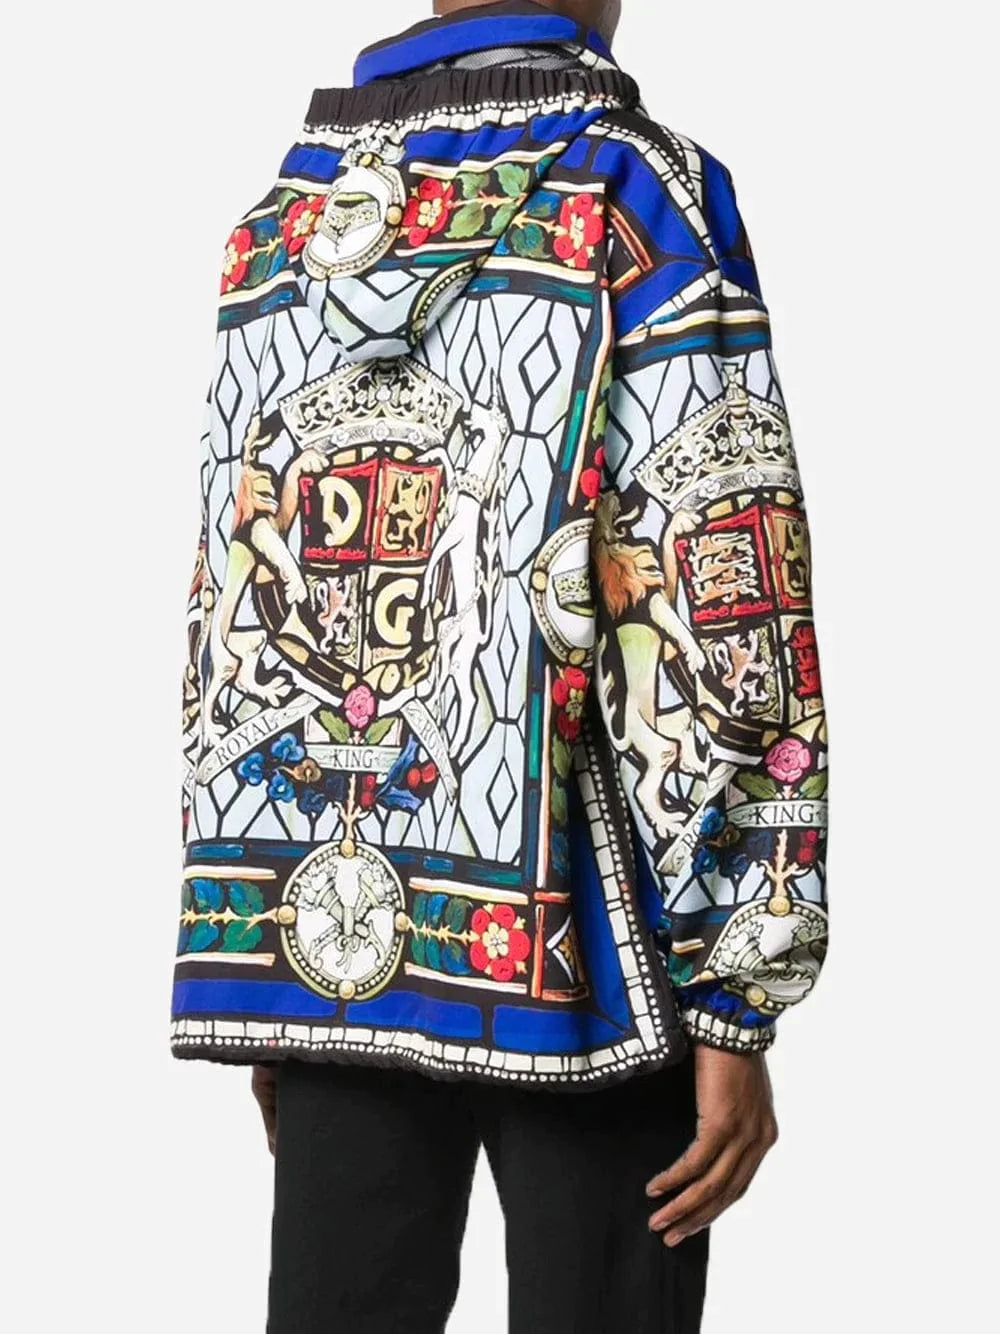 Dolce & Gabbana Mosaic Print Bomber Jacket